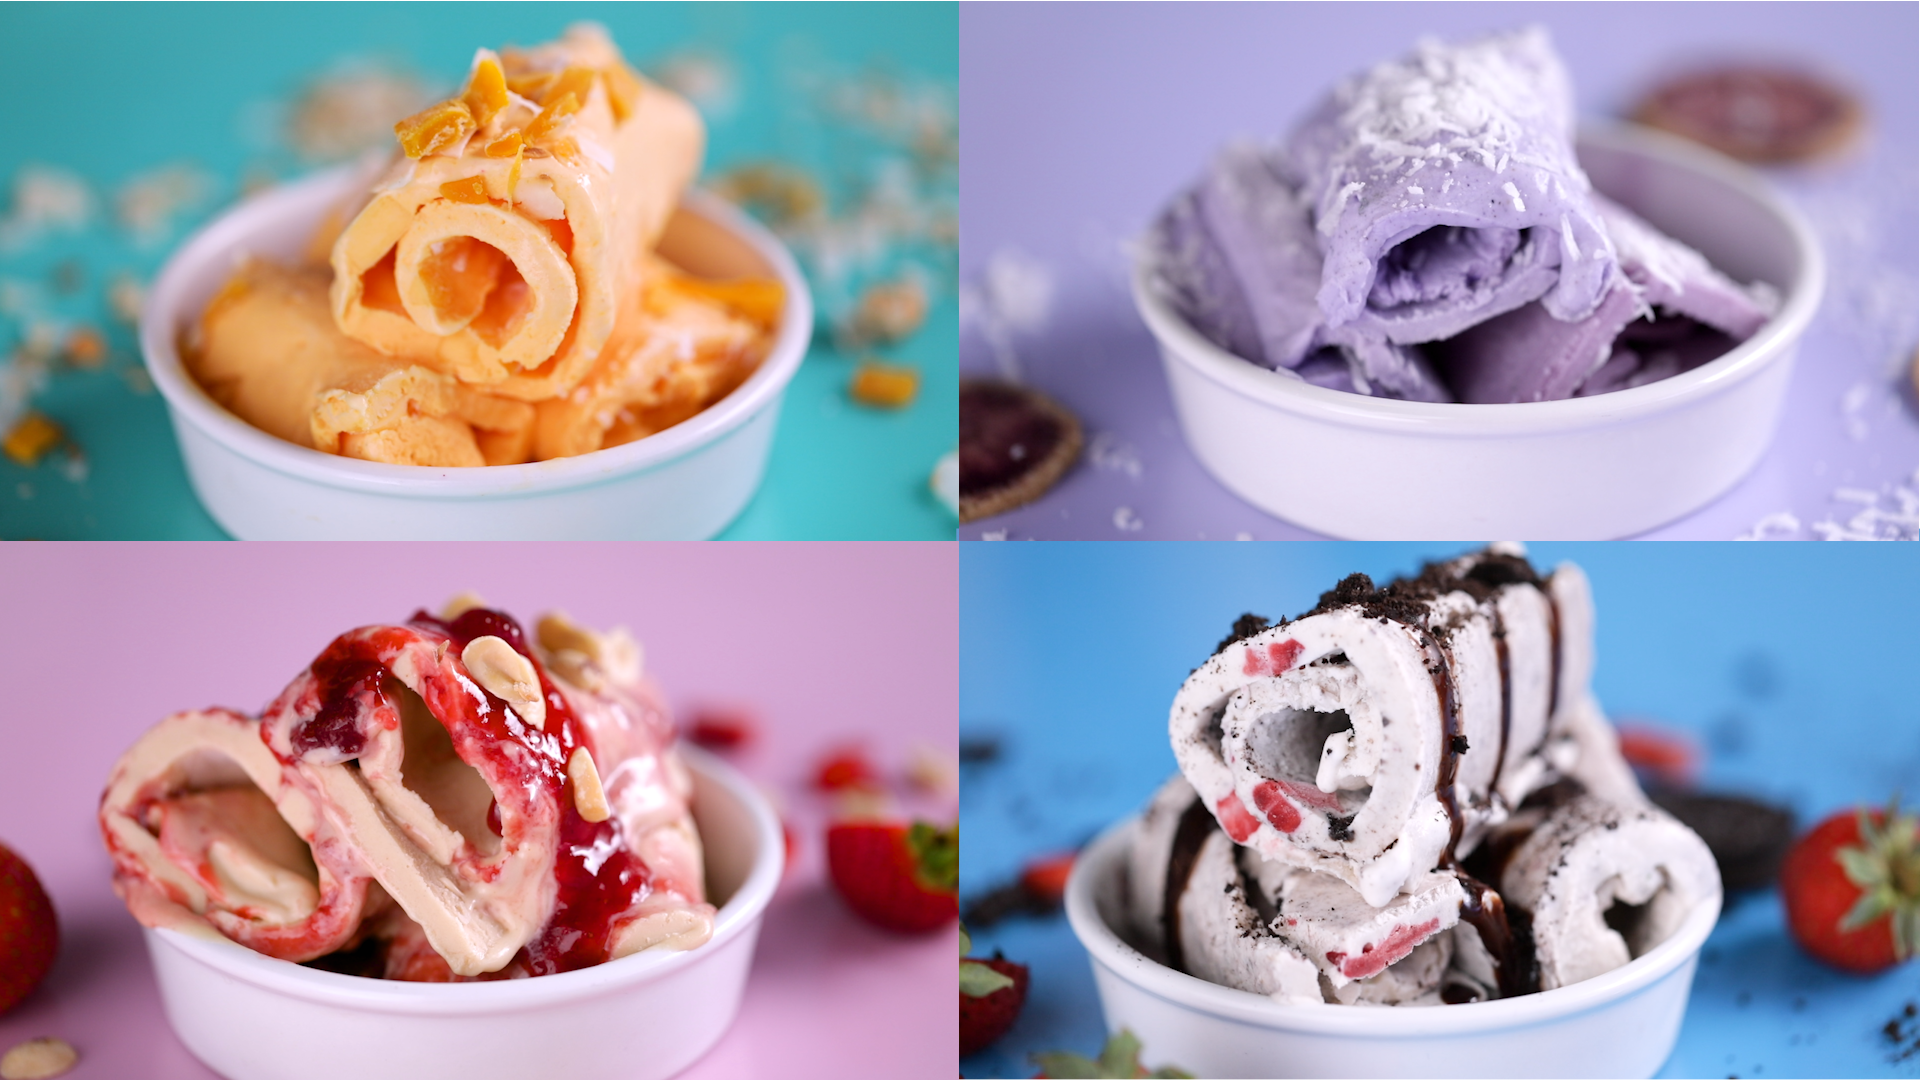 Rolled Ice Cream 4 Ways